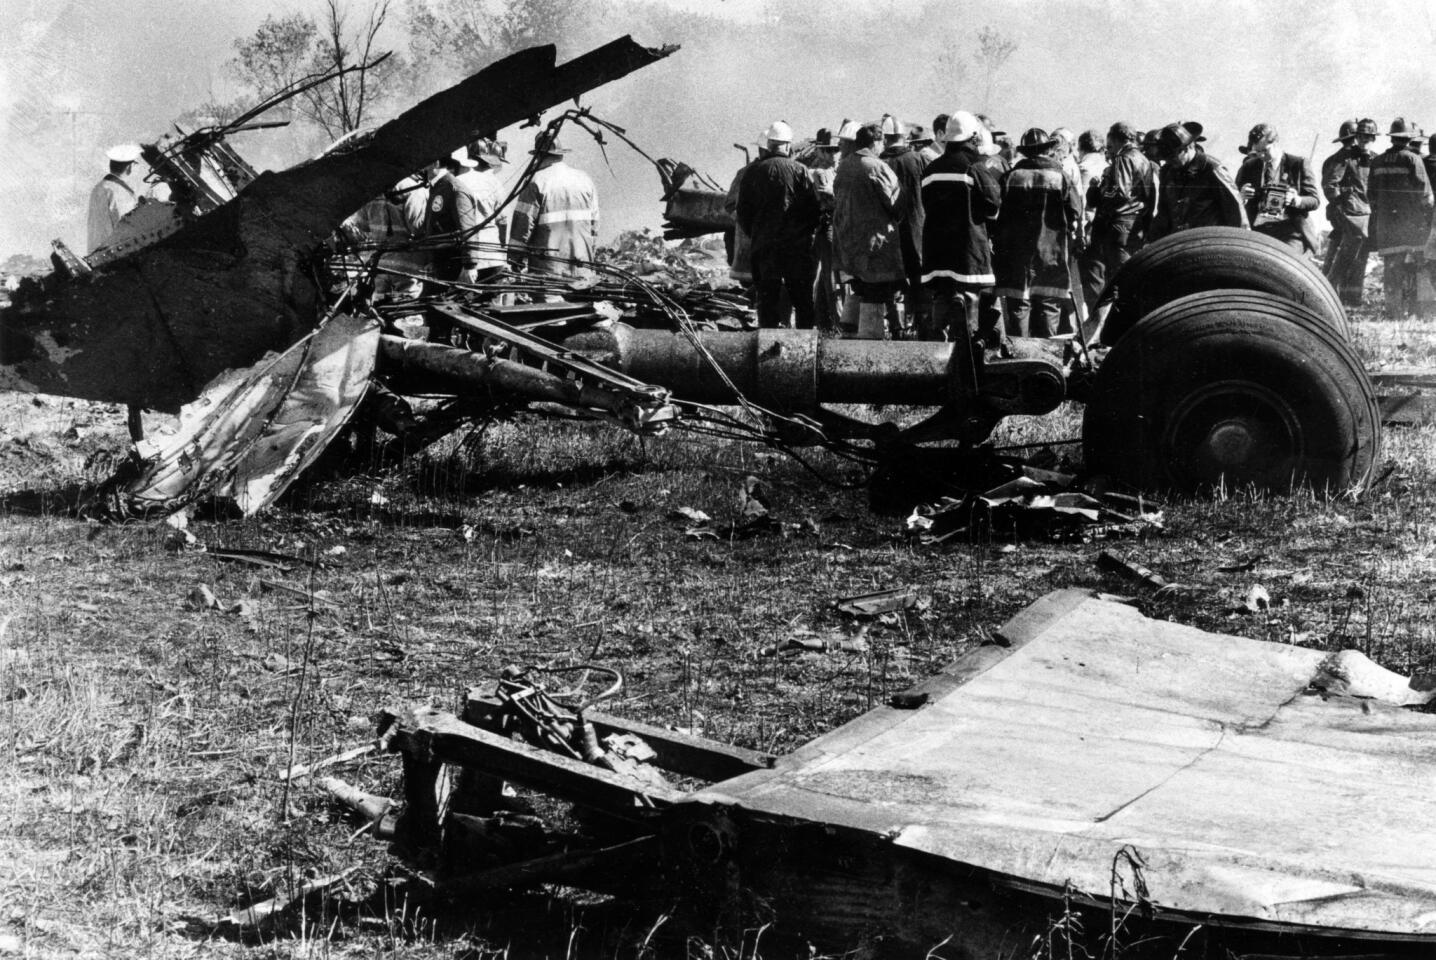 Remembering Flight 191